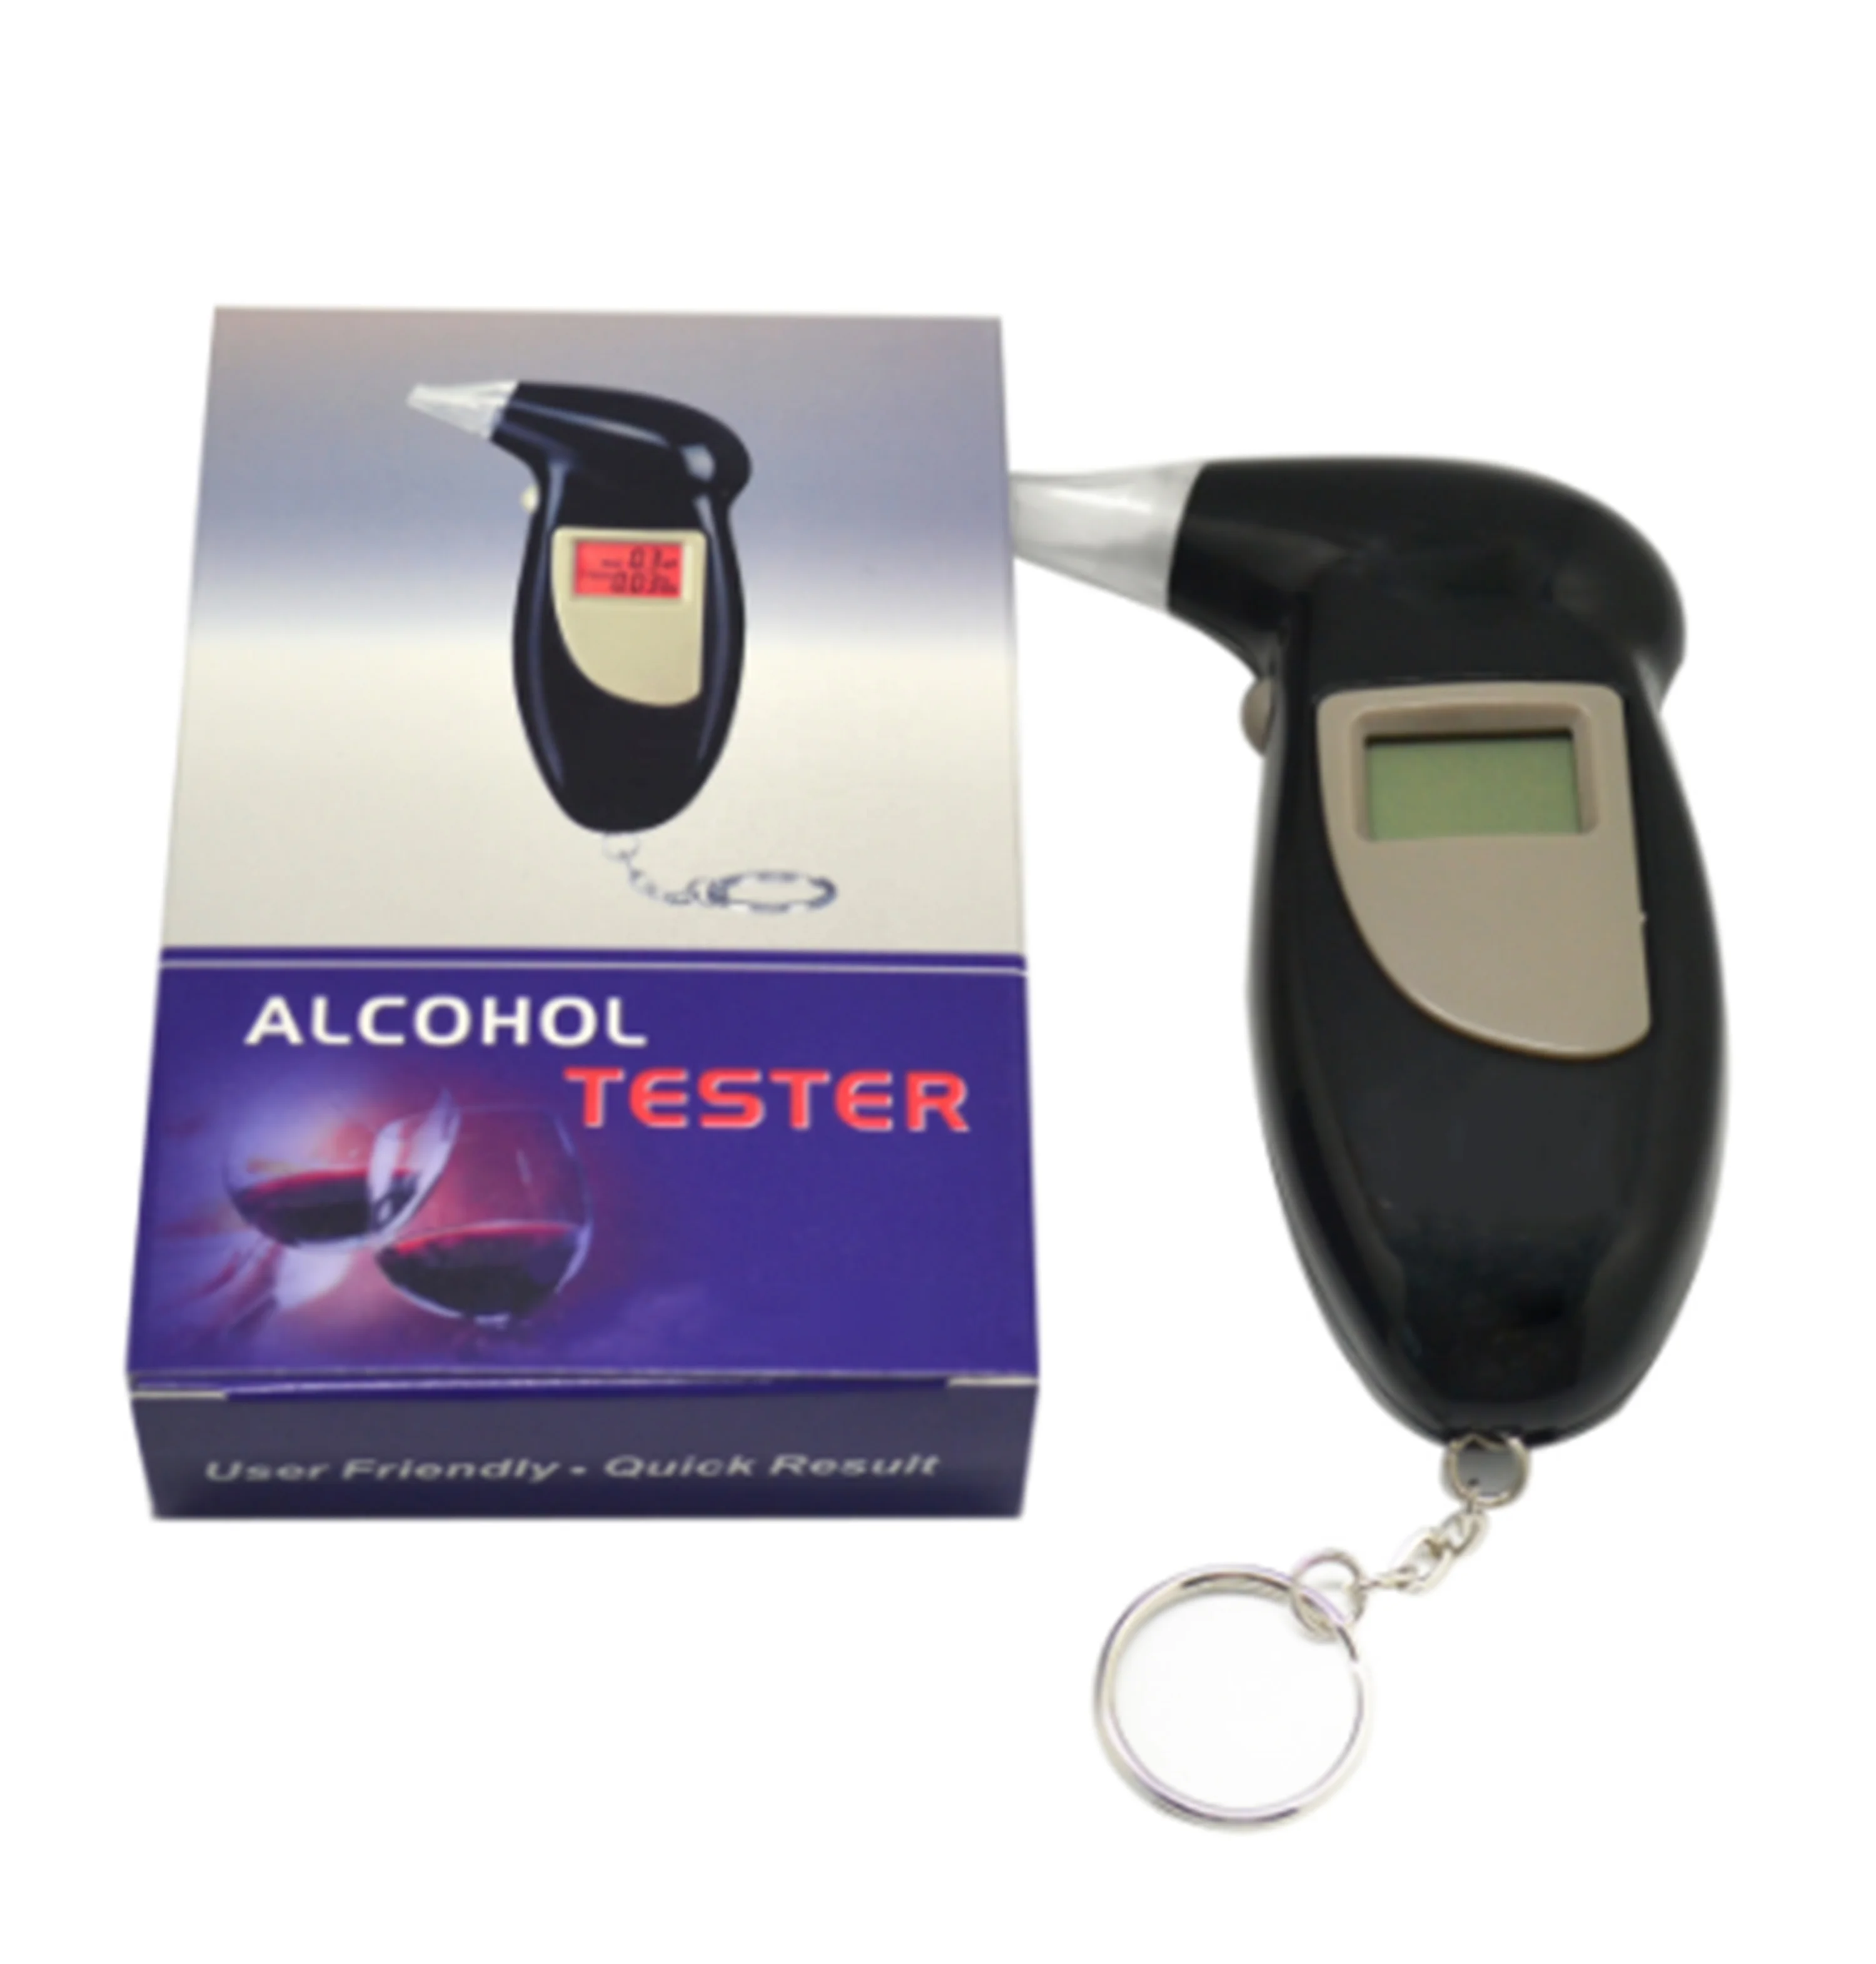 Personal Digital changchun breath alcohol tester breathalyzer